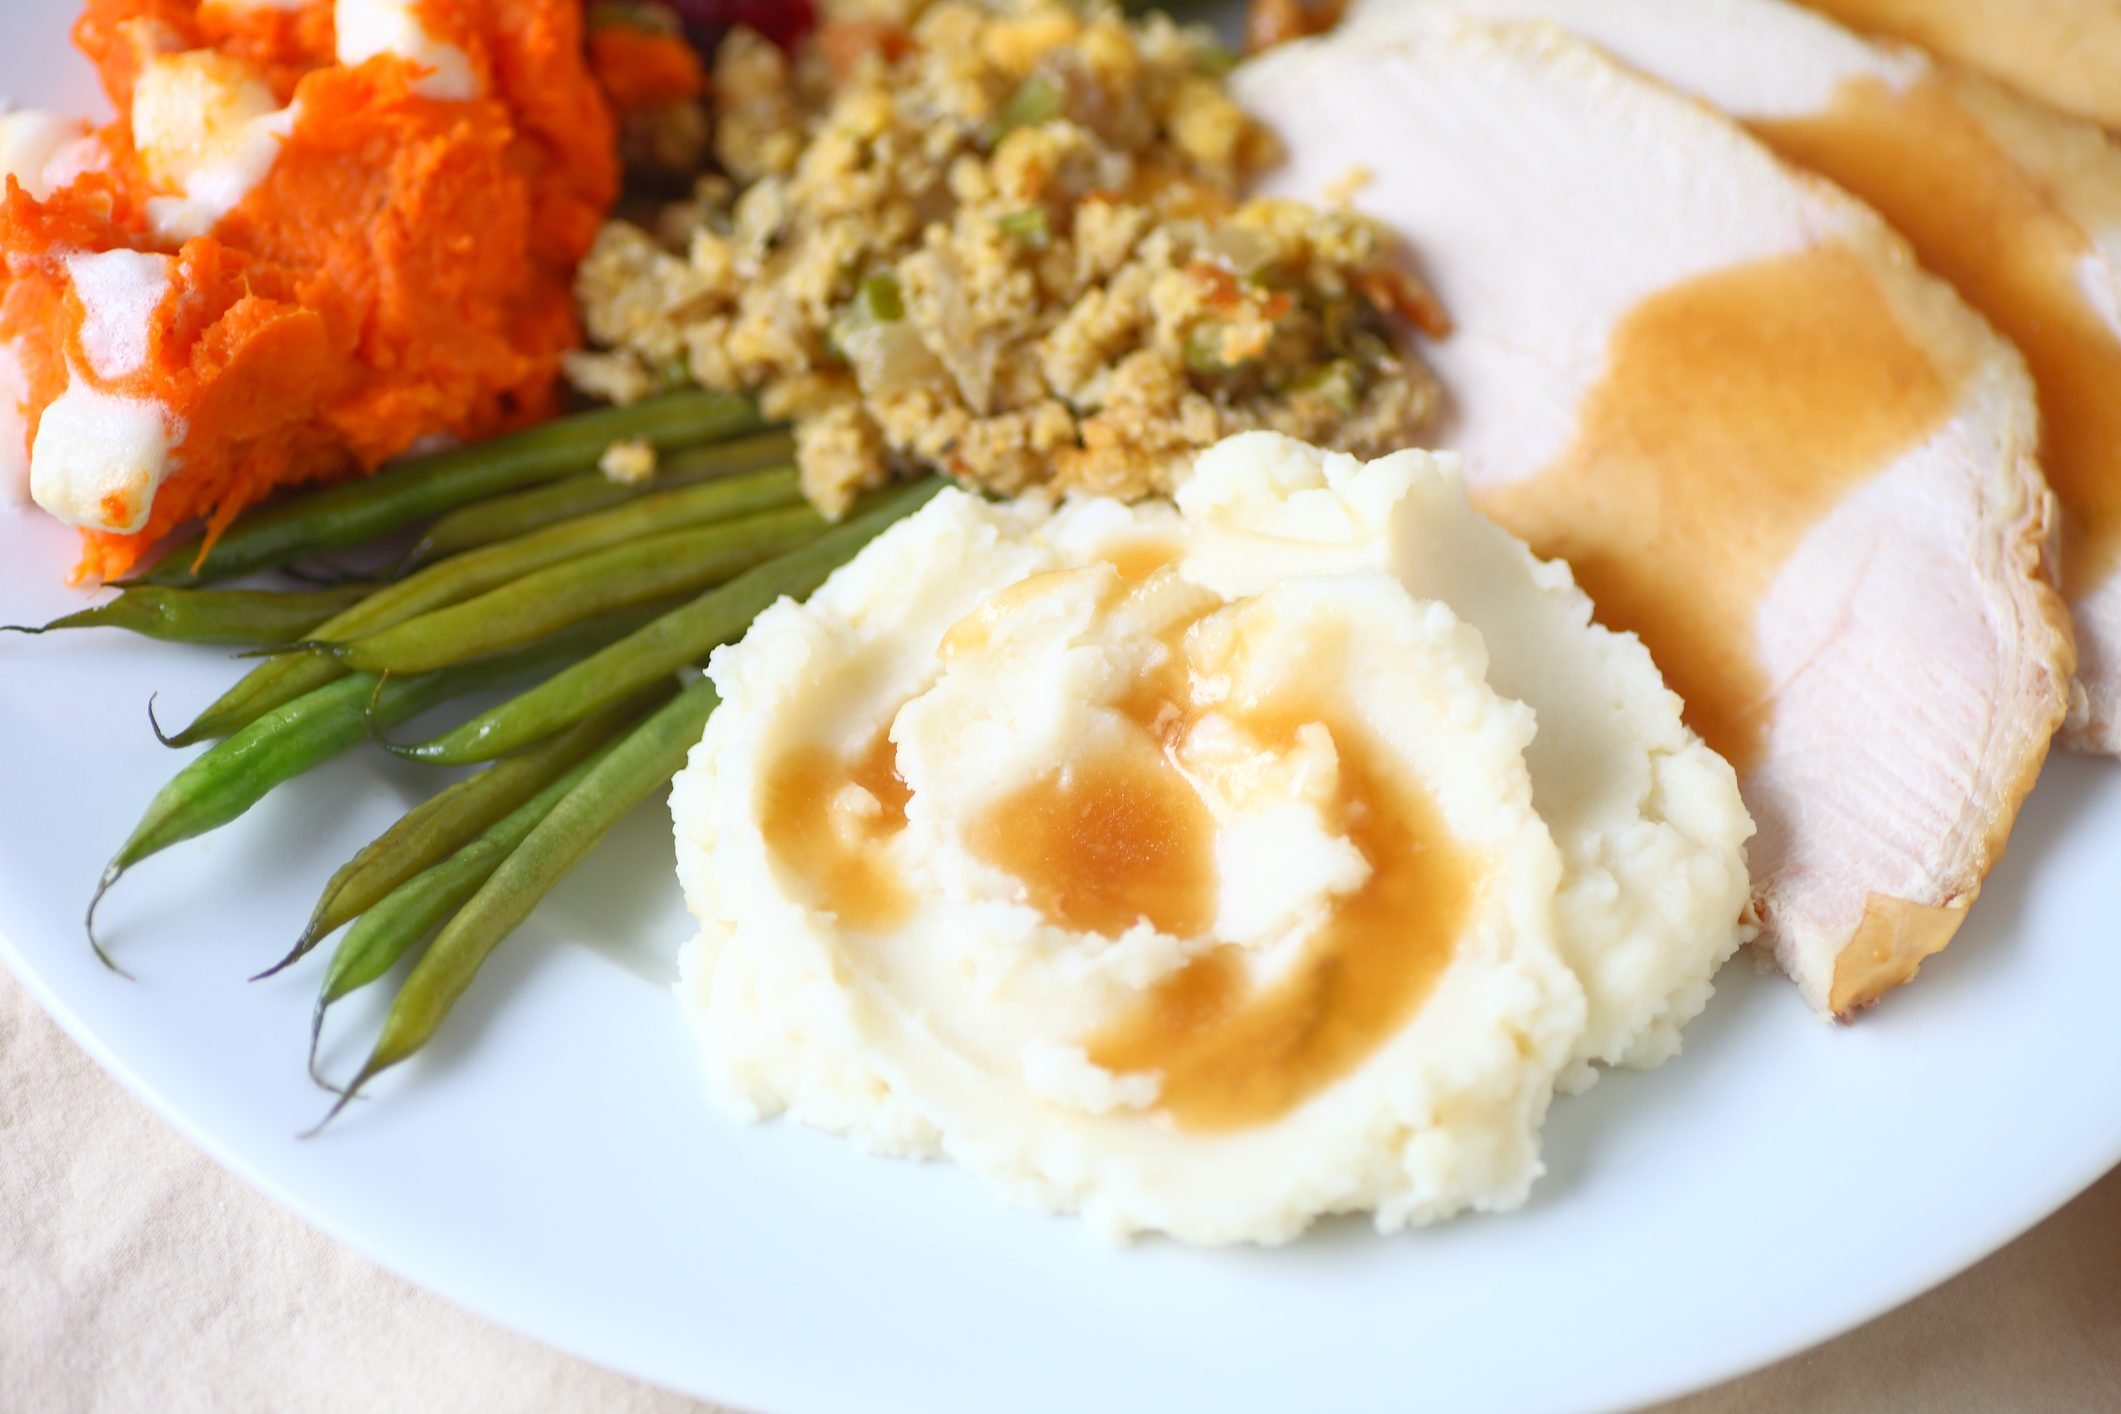 Turkey dinner on white plate